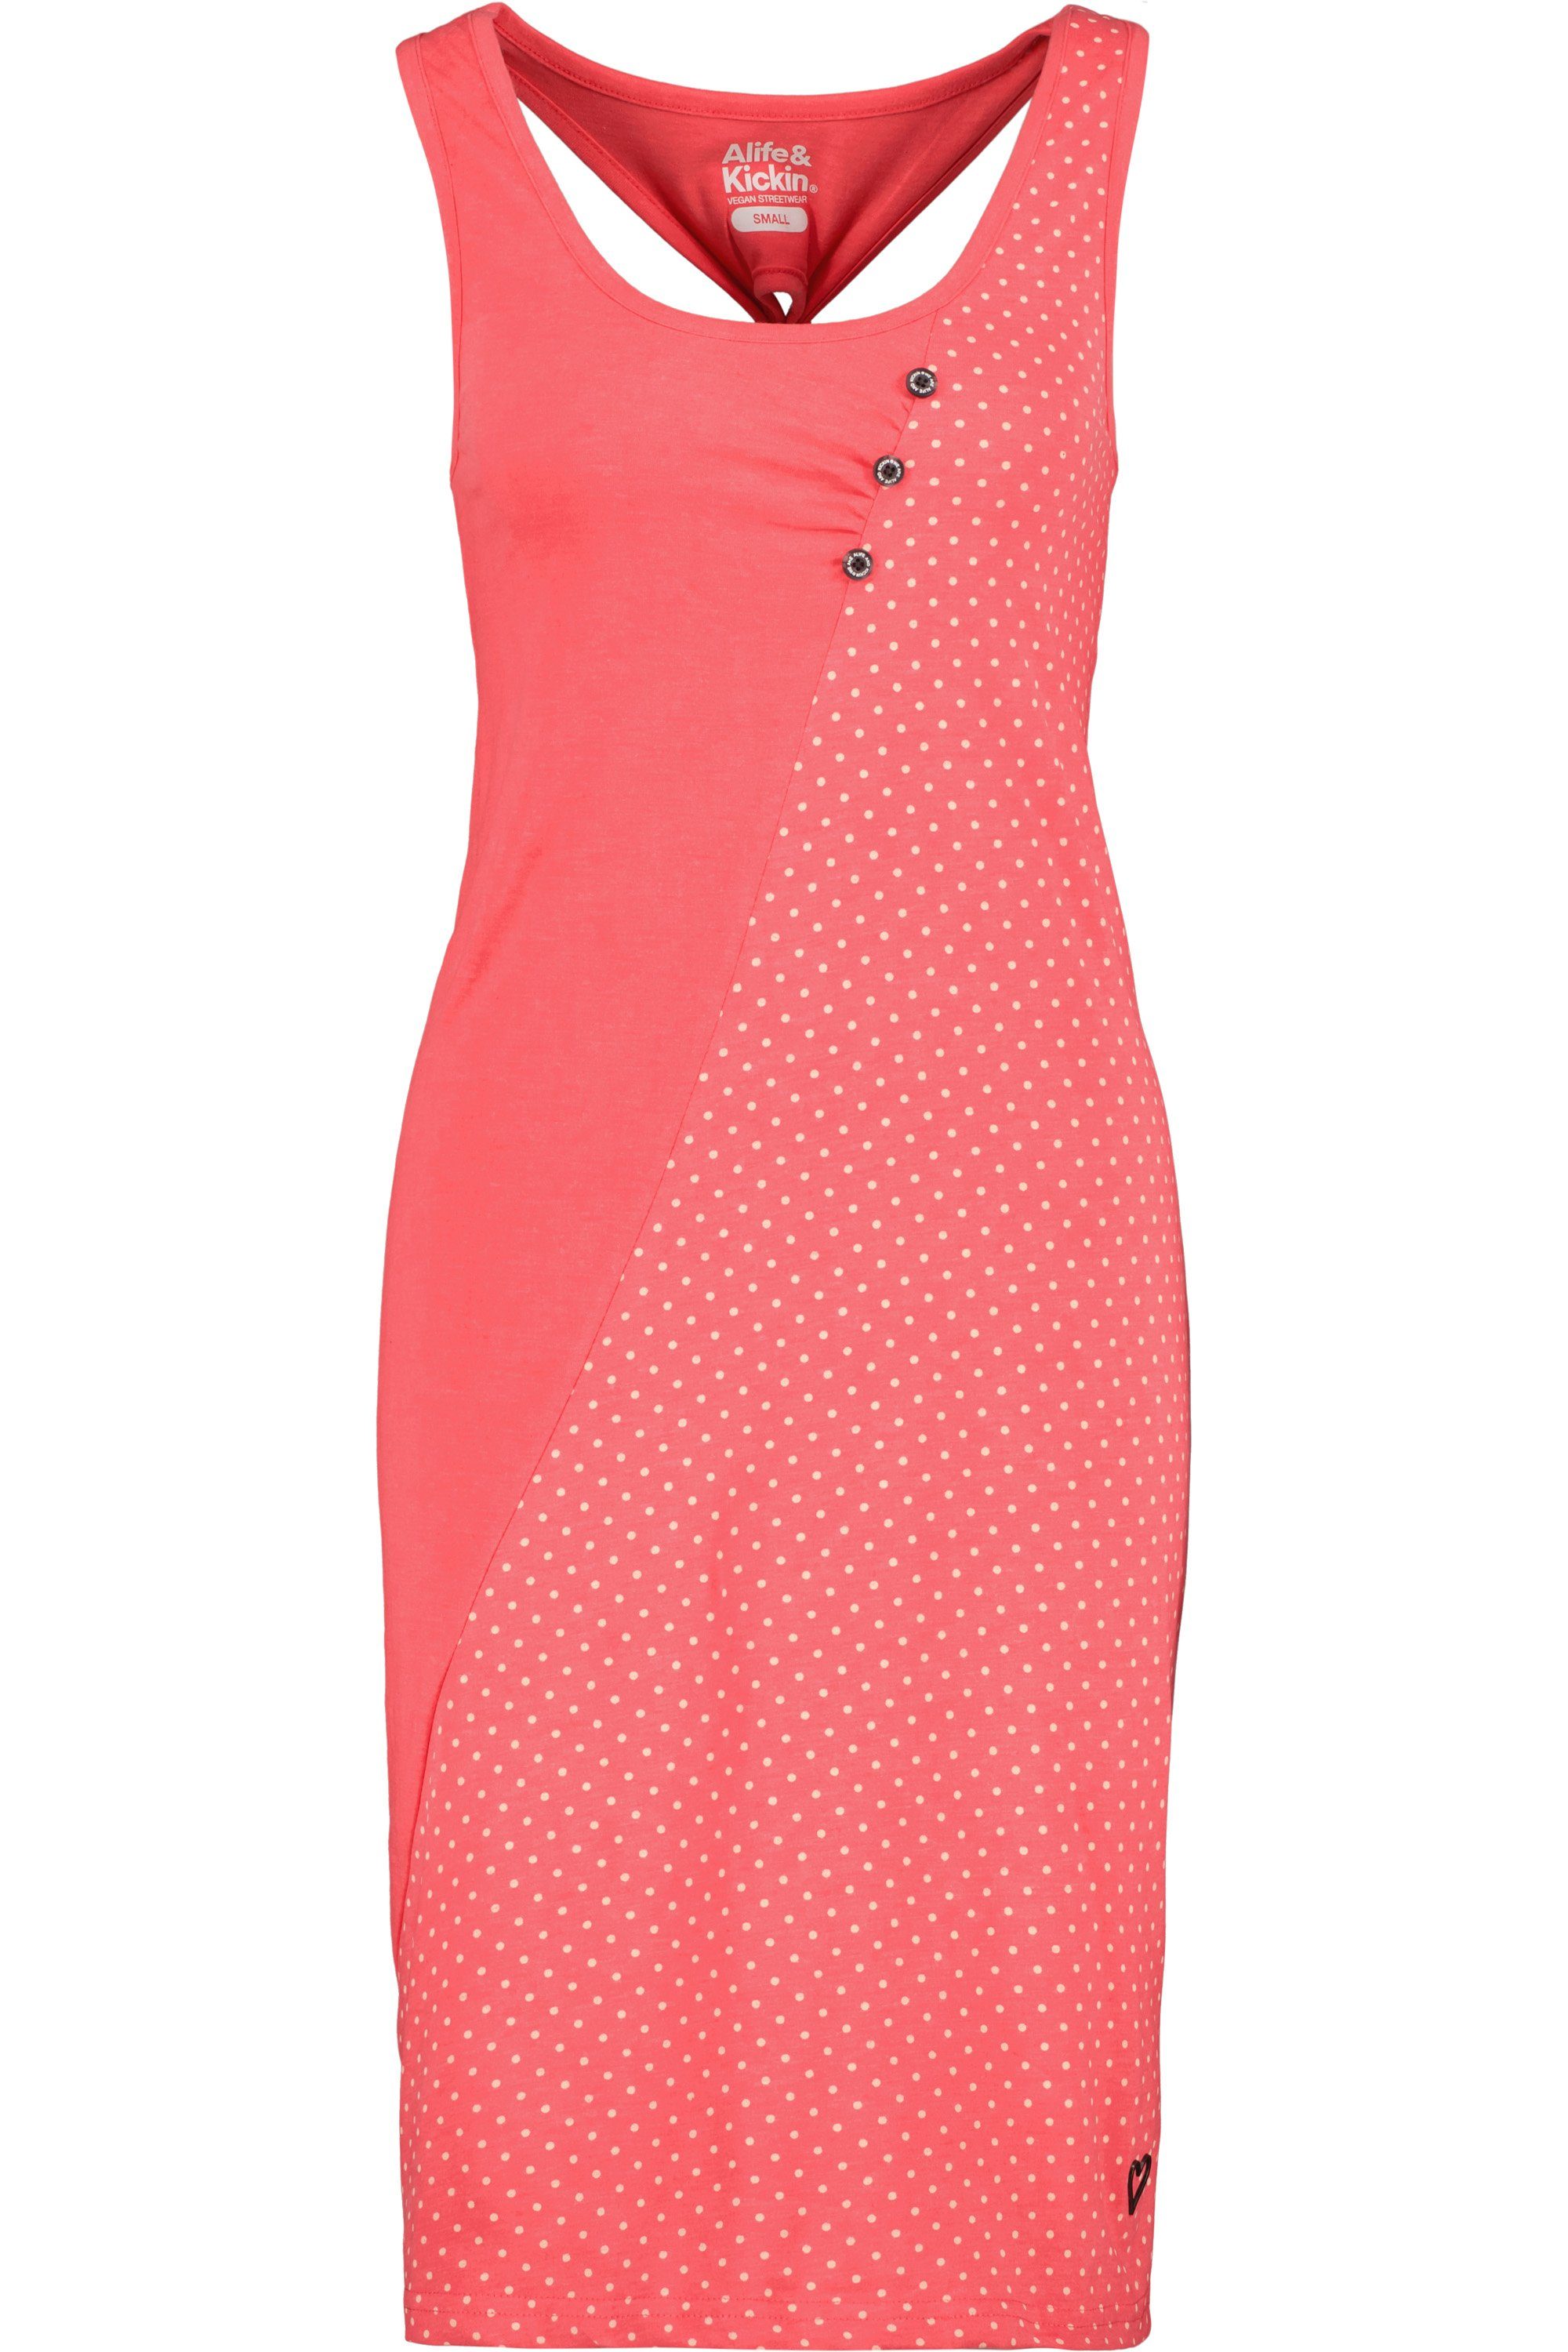 Alife & Kickin B melange Damen Dress Sommerkleid, Sommerkleid CameronAK coral Sleeveless Kleid